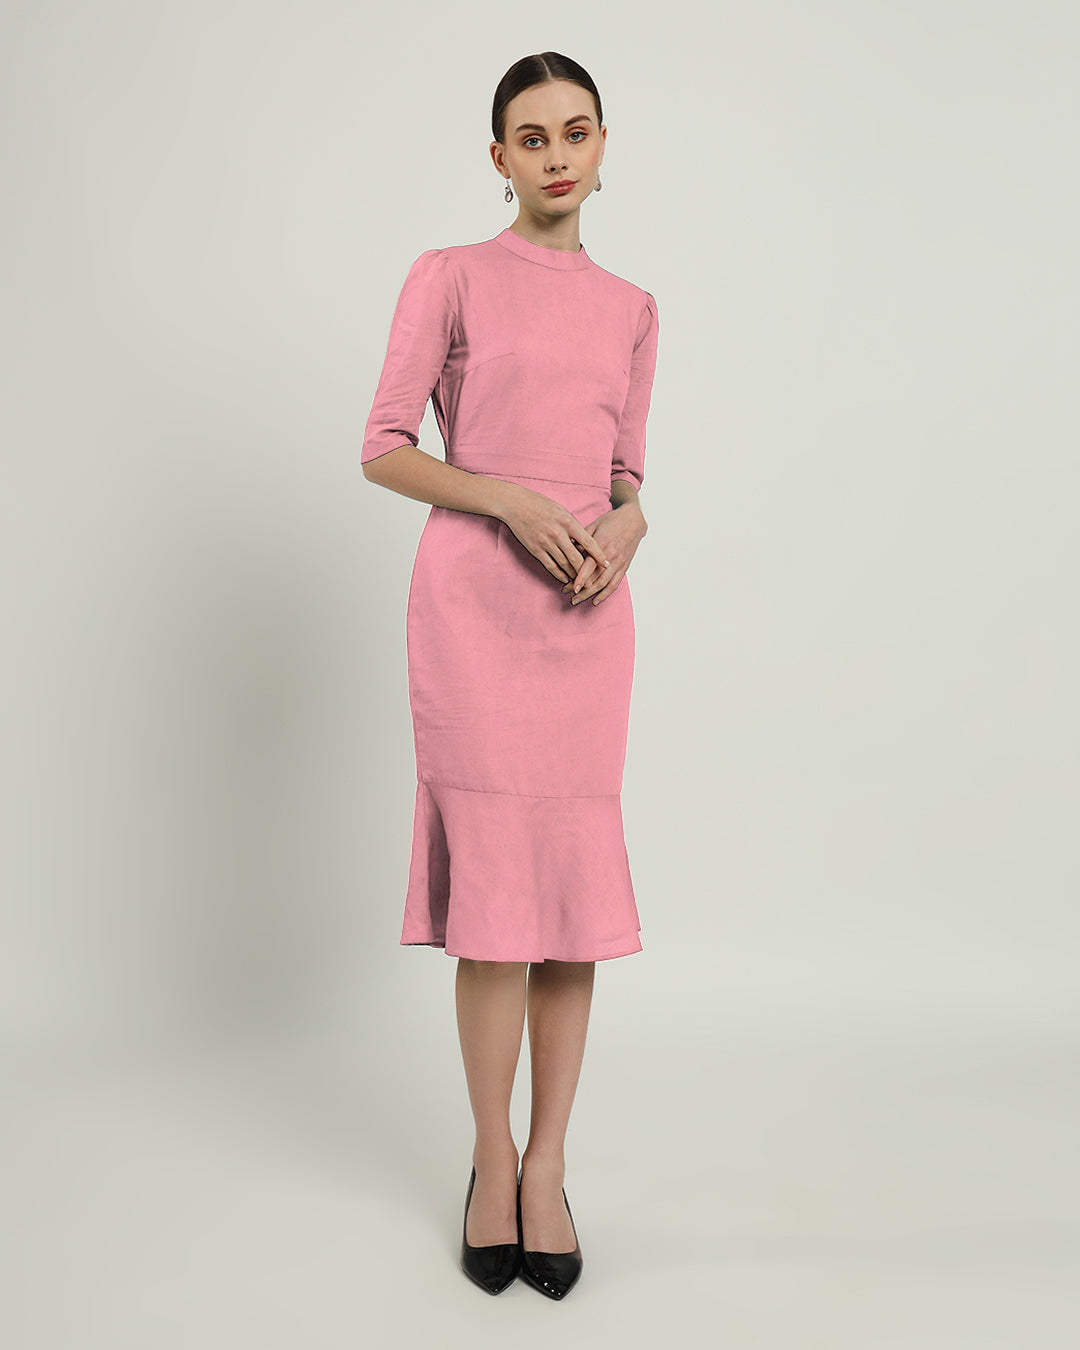 The Charlotte Fondant Pink Dress